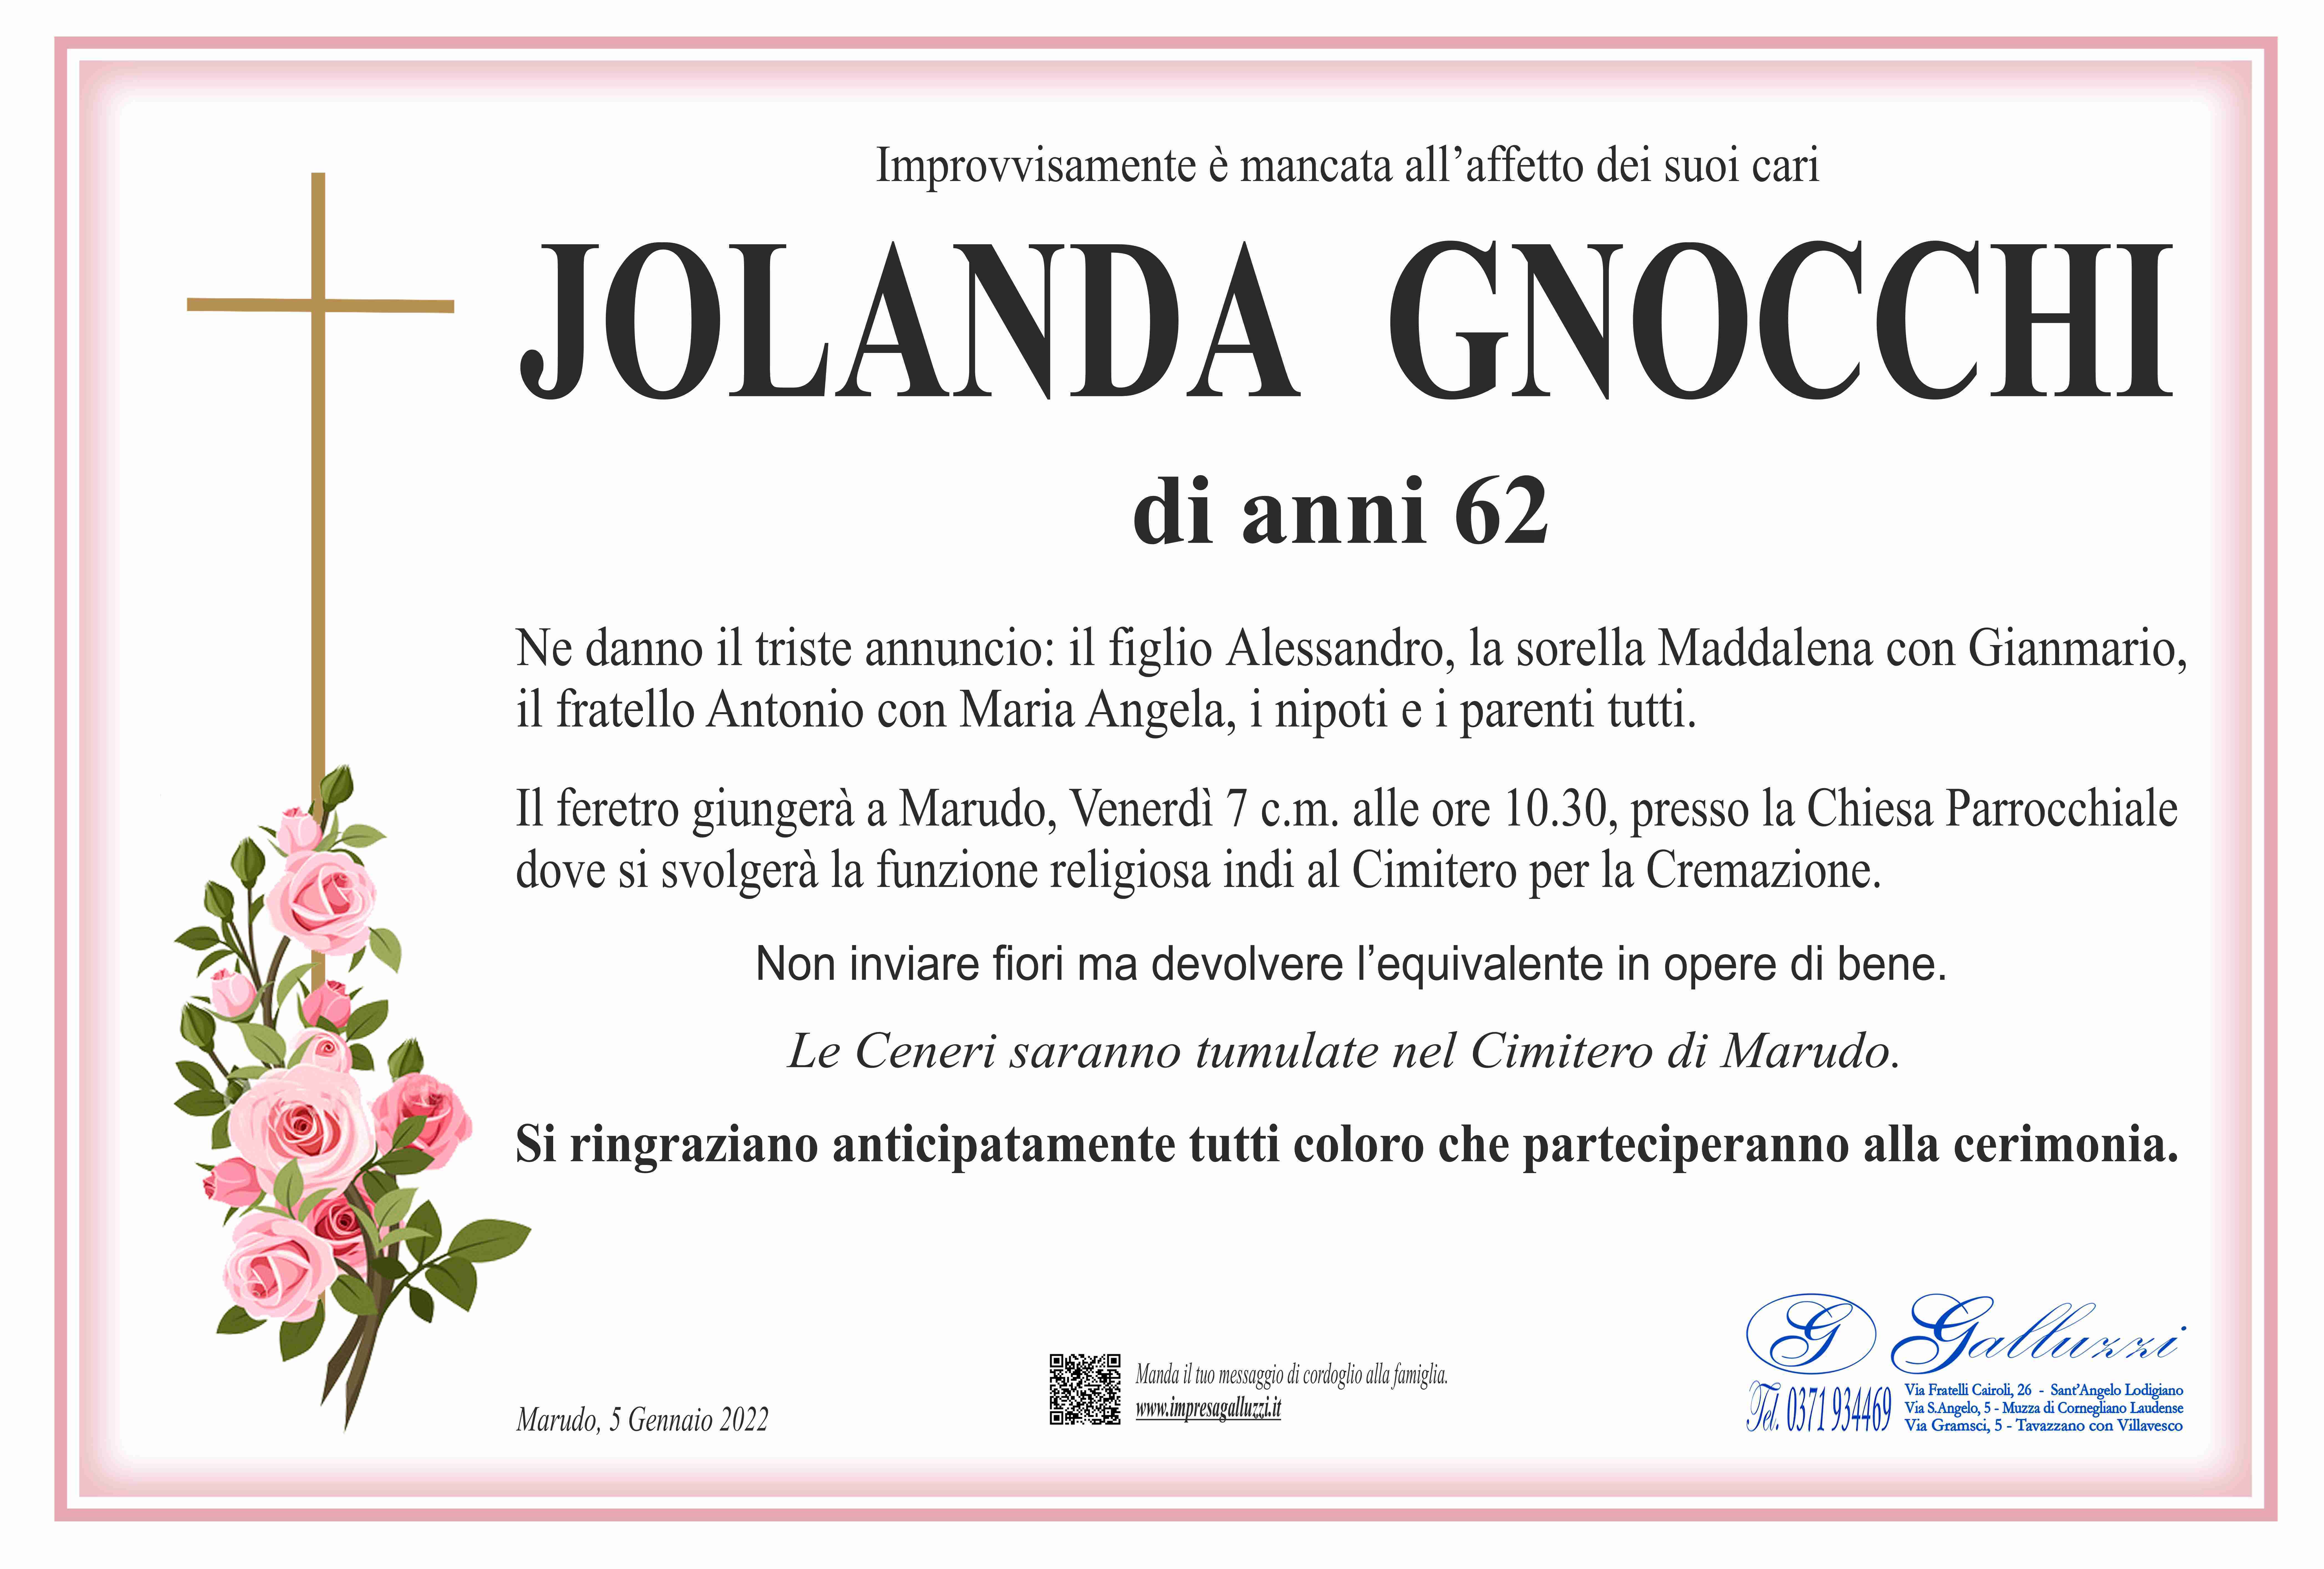 Jolanda Gnocchi